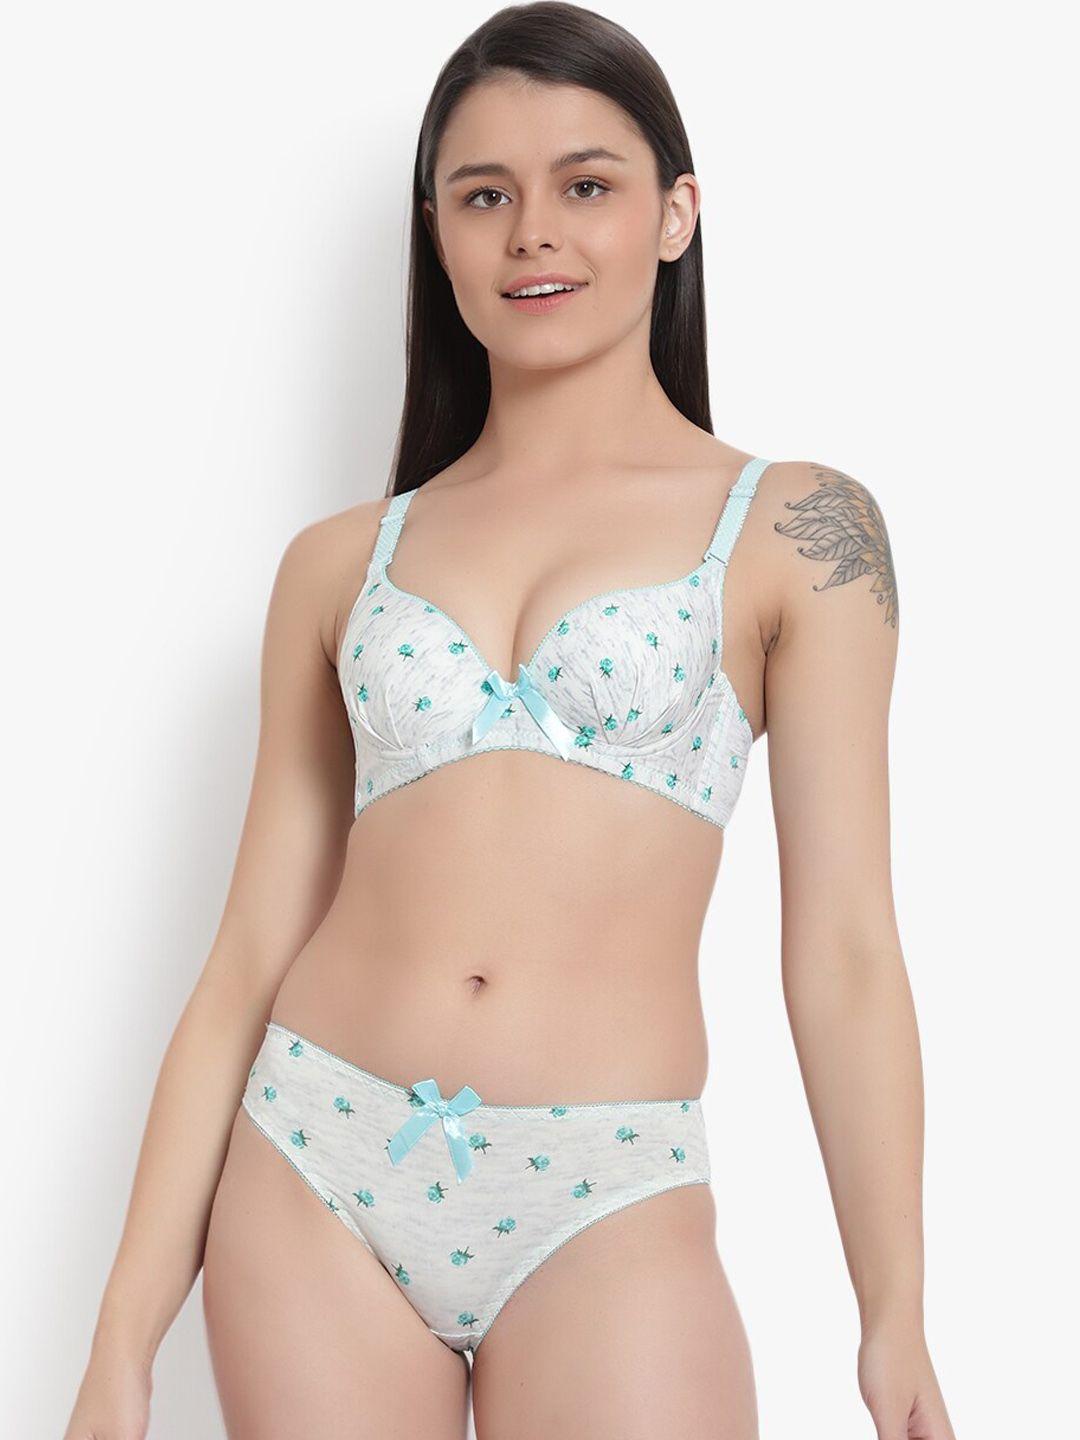 brachy women off-white & green floral printed cotton lingerie set bca_set2112a-30a